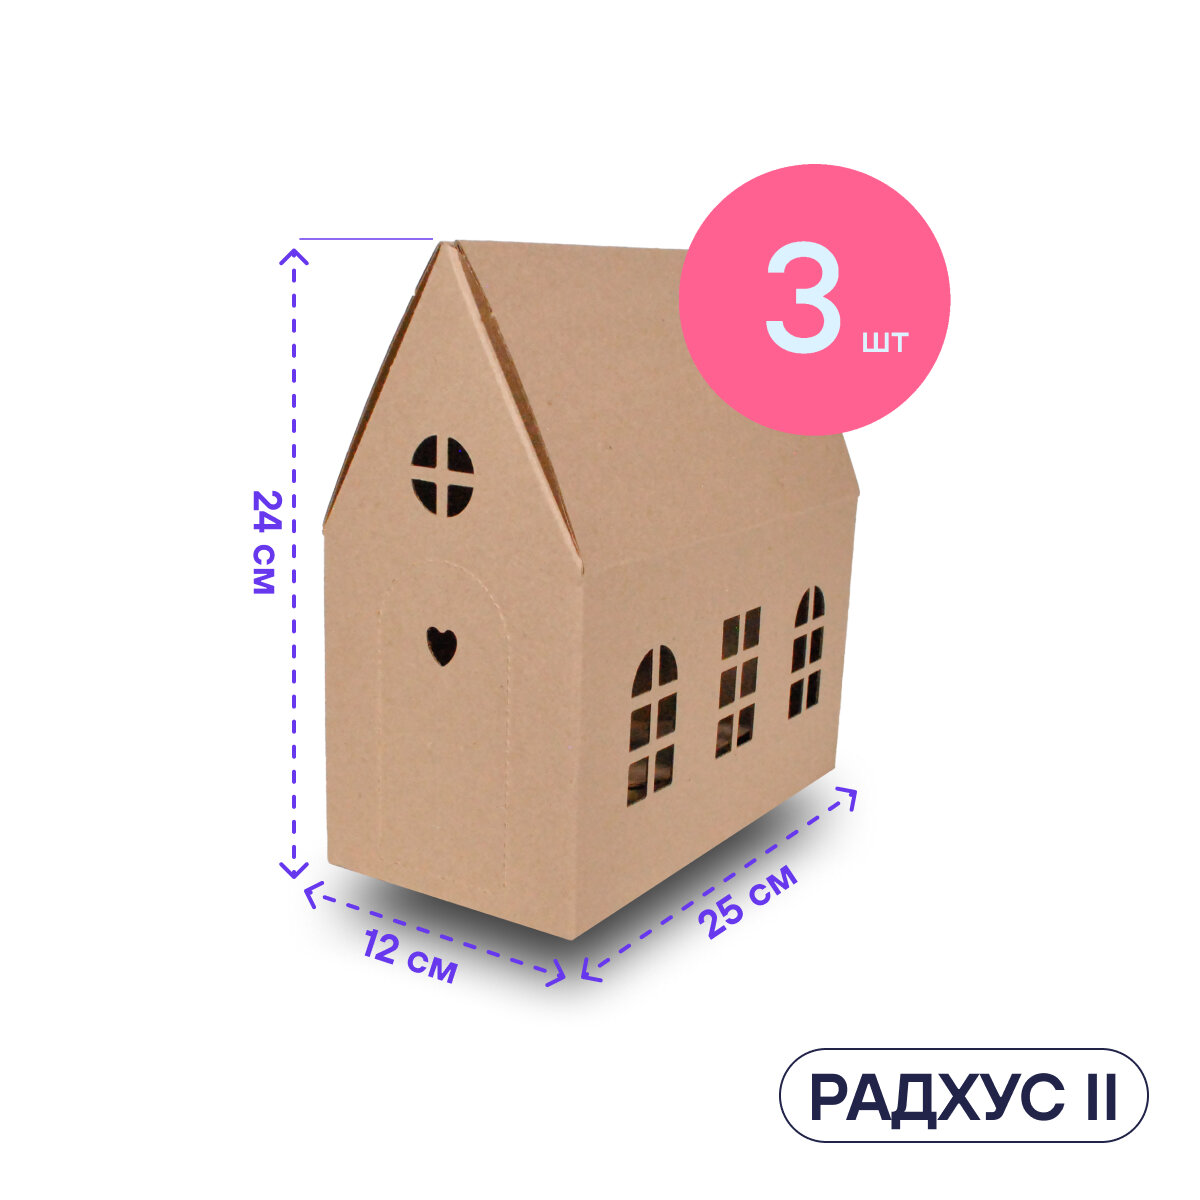 Домик из картона для упаковки подарка и творчества BOXY радхус II, 24х12х25 см, бурый цвет, в комплекте 3 шт.